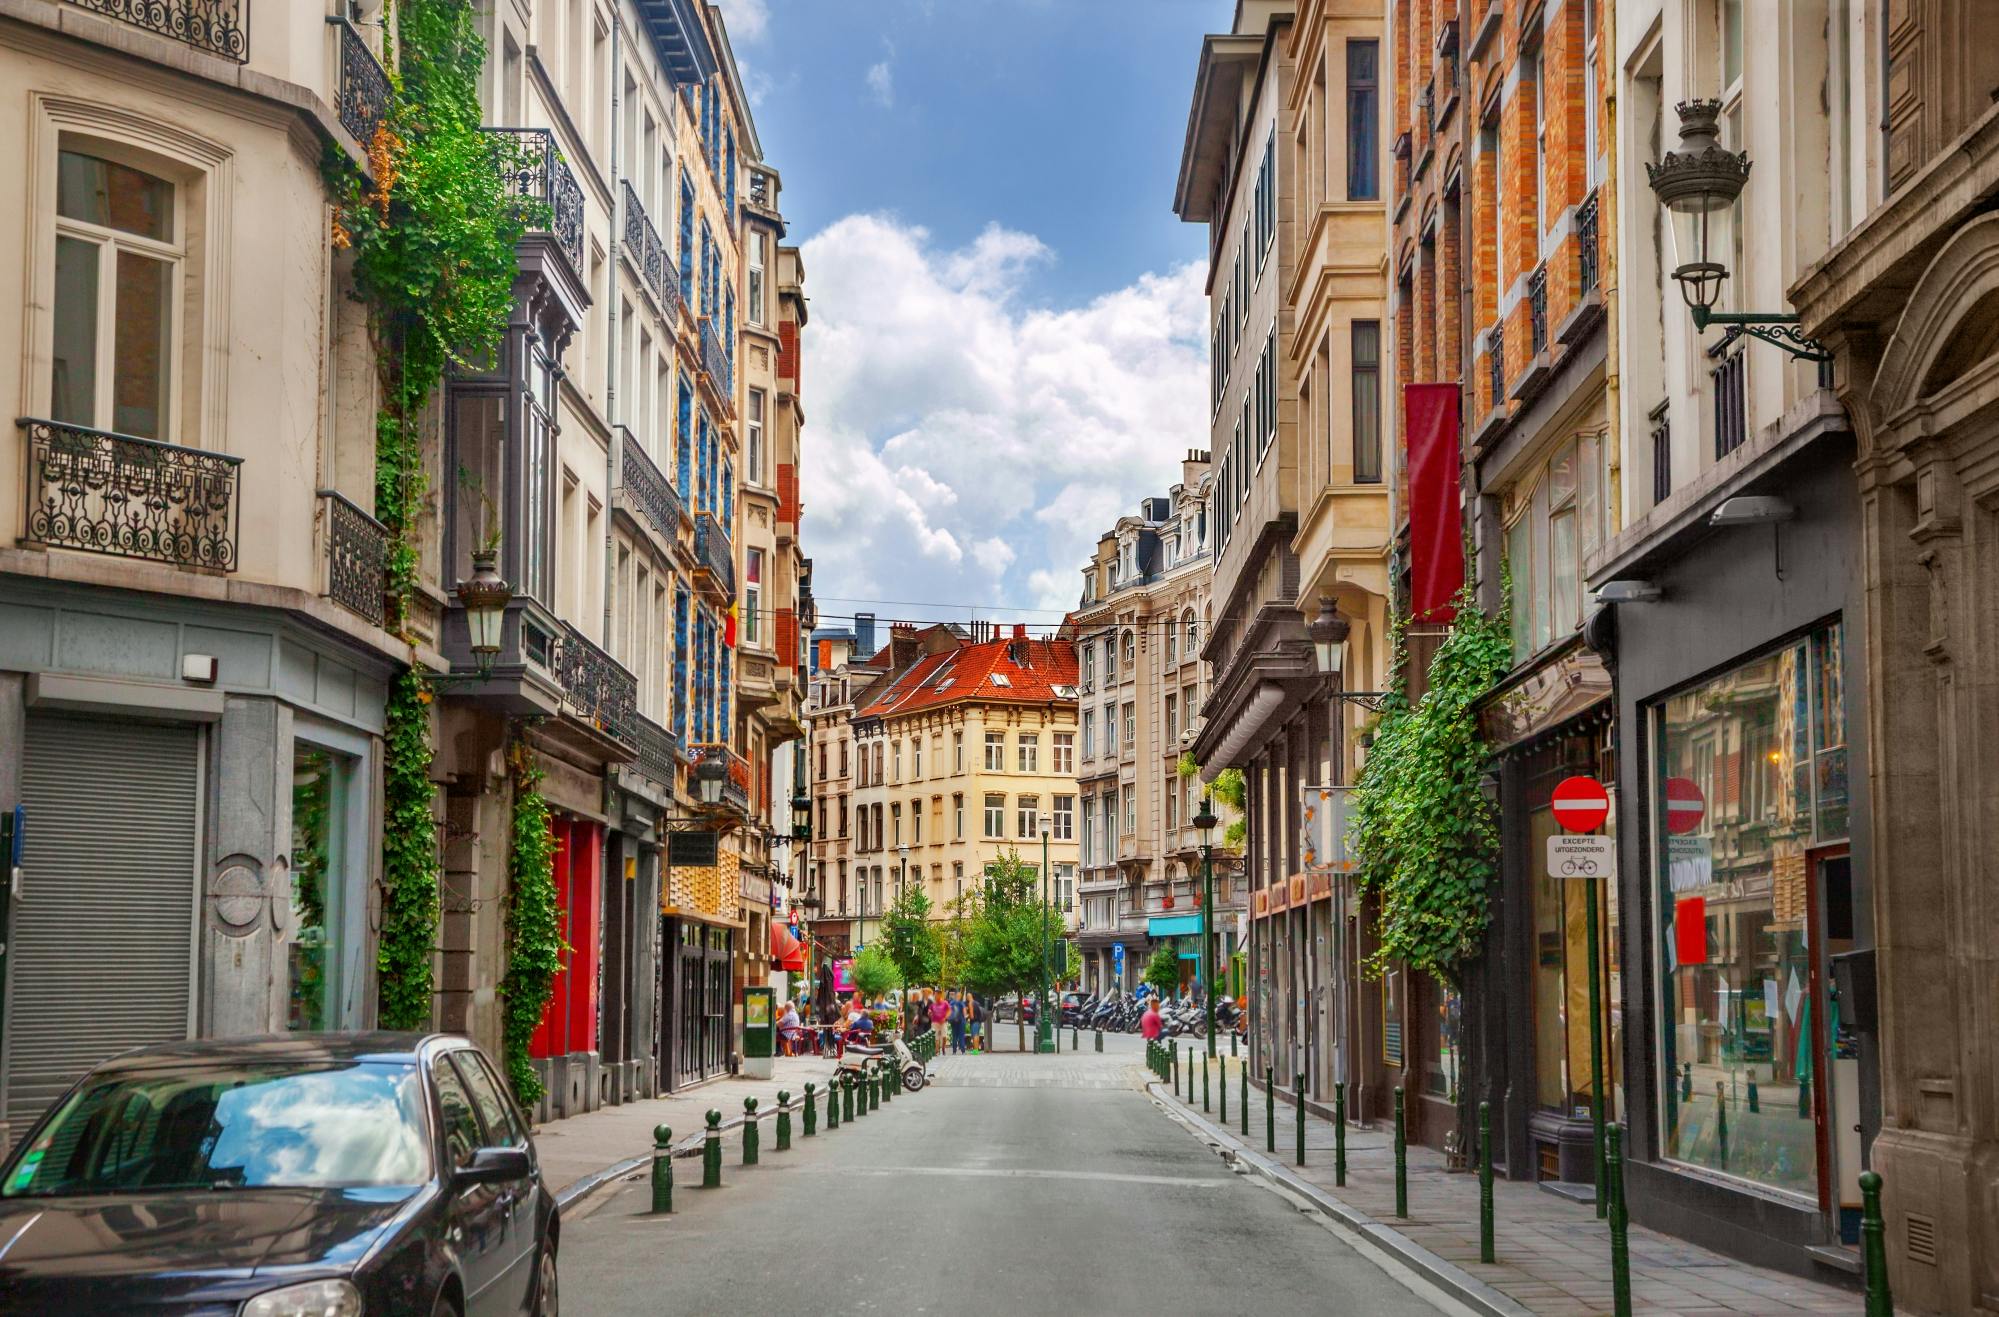 Jogo de fuga urbana: descubra os segredos de Bruxelas